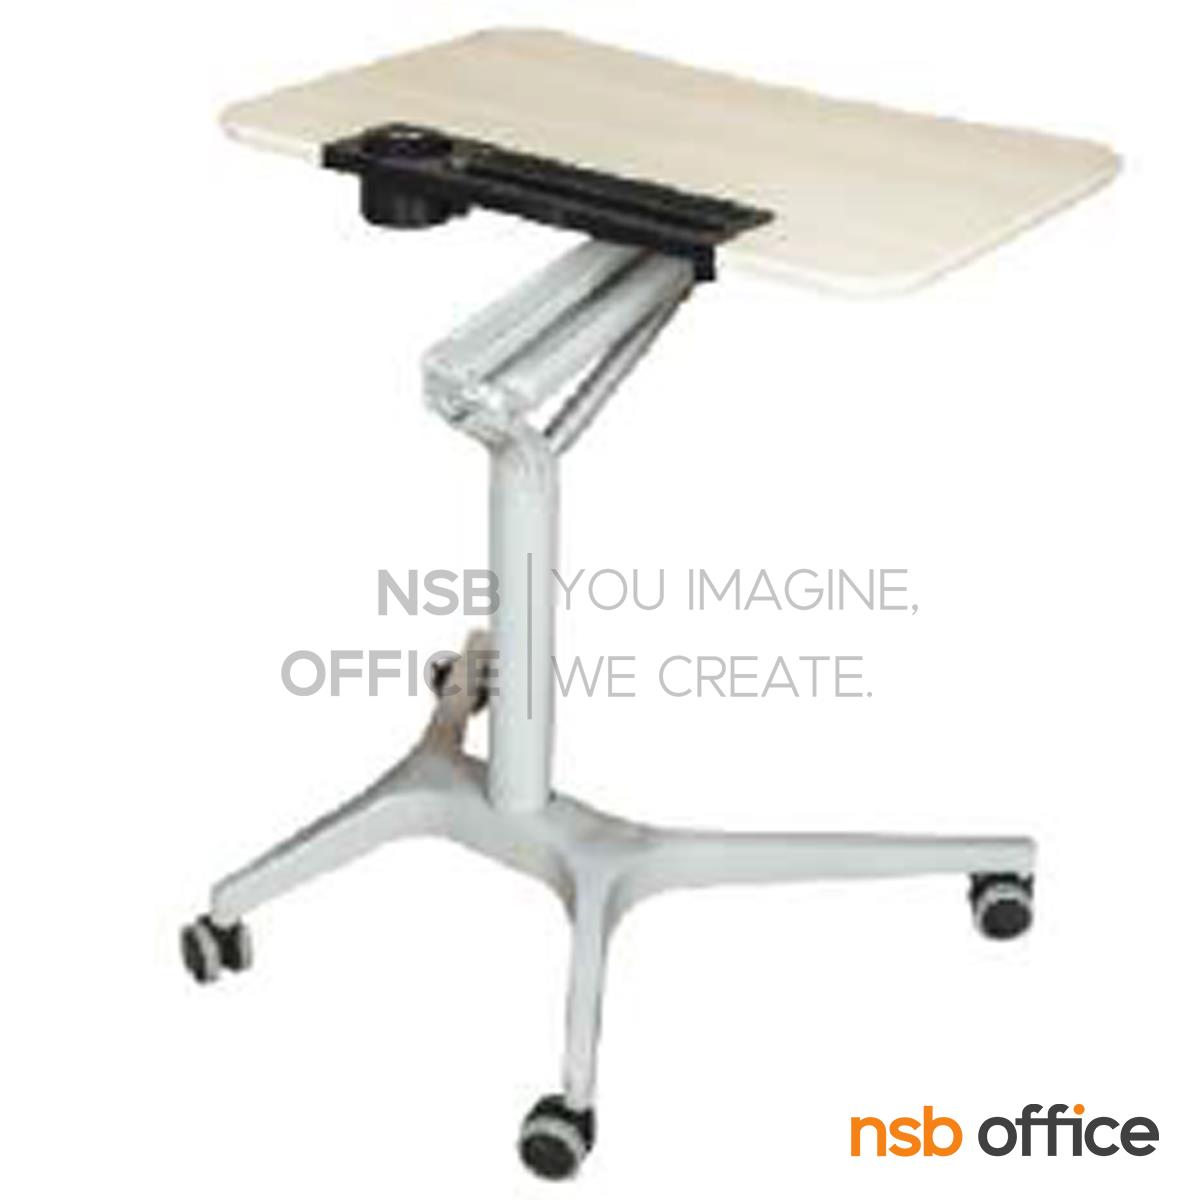 B30A092:โต๊ะวางโน๊ตบุ๊ค โต๊ะอเนกค์ประสงค์ล้อเลื่อน รุ่น Malcolm (มัลคัม)  สามารถปรับระดับได้